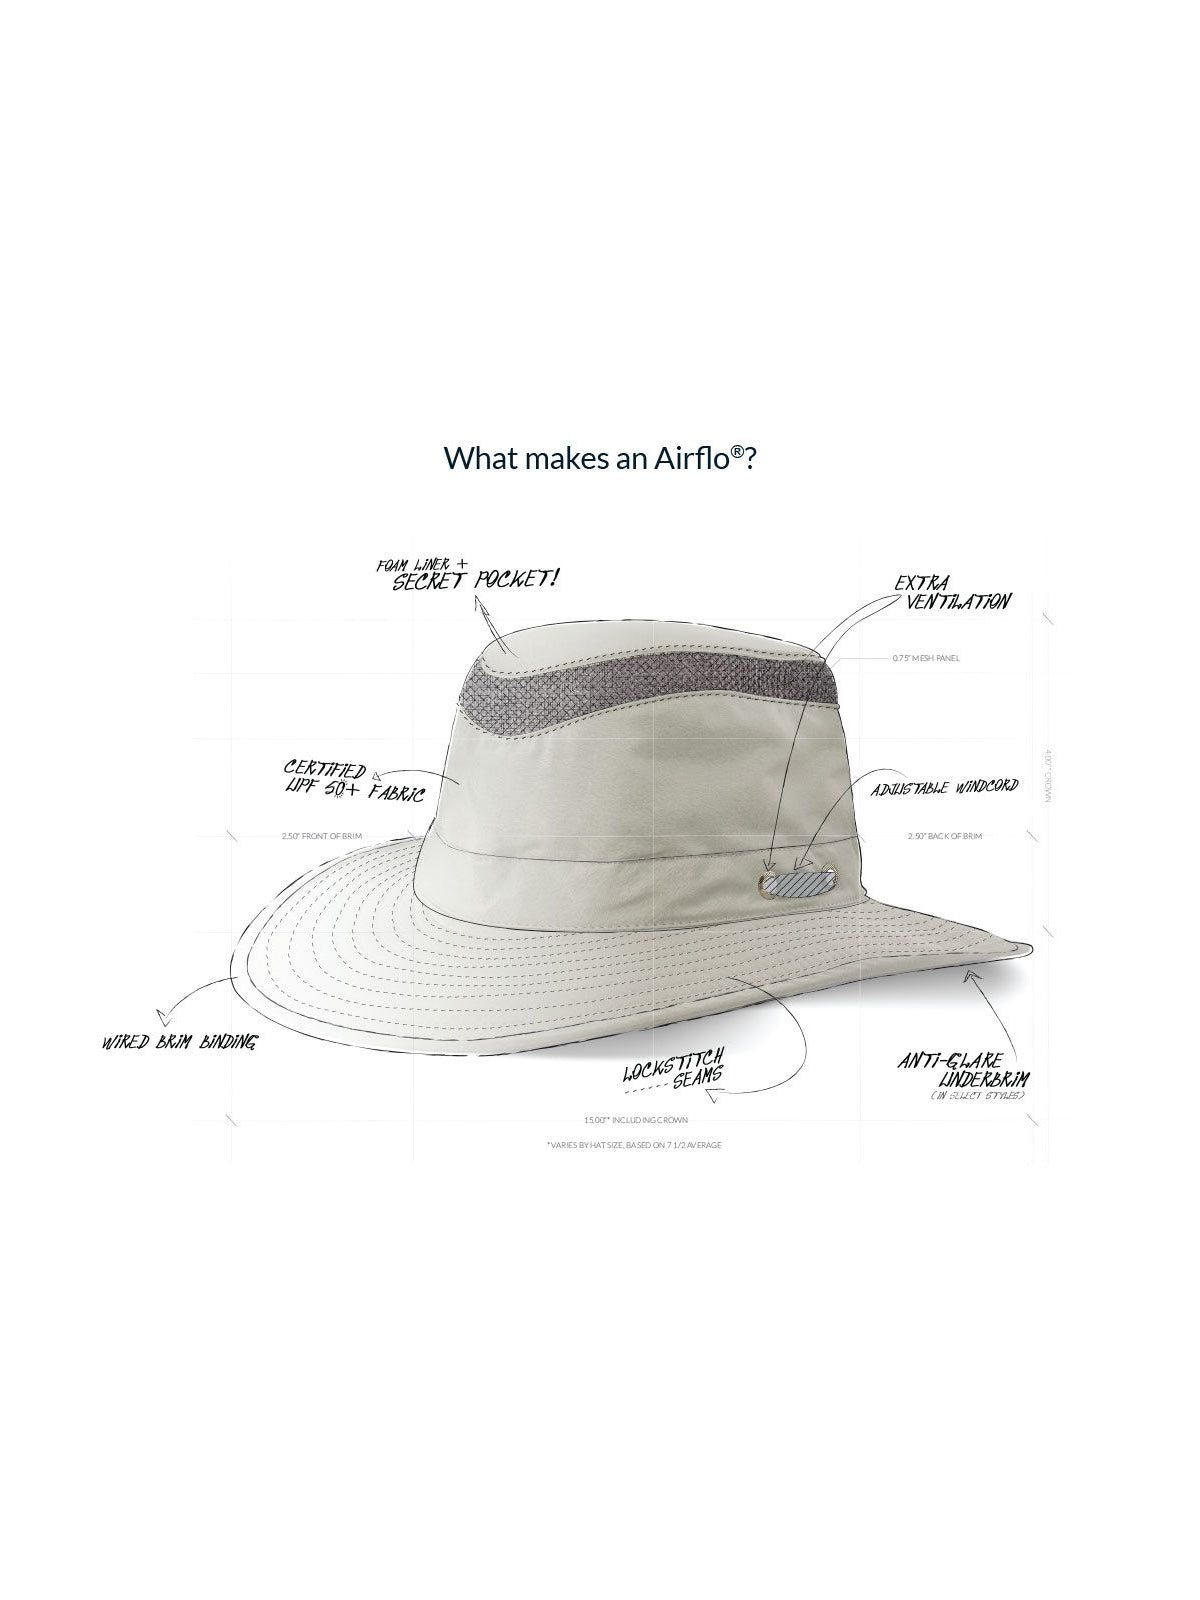 Tilley Airflow Broad Brim Hat in Khaki (Khol)